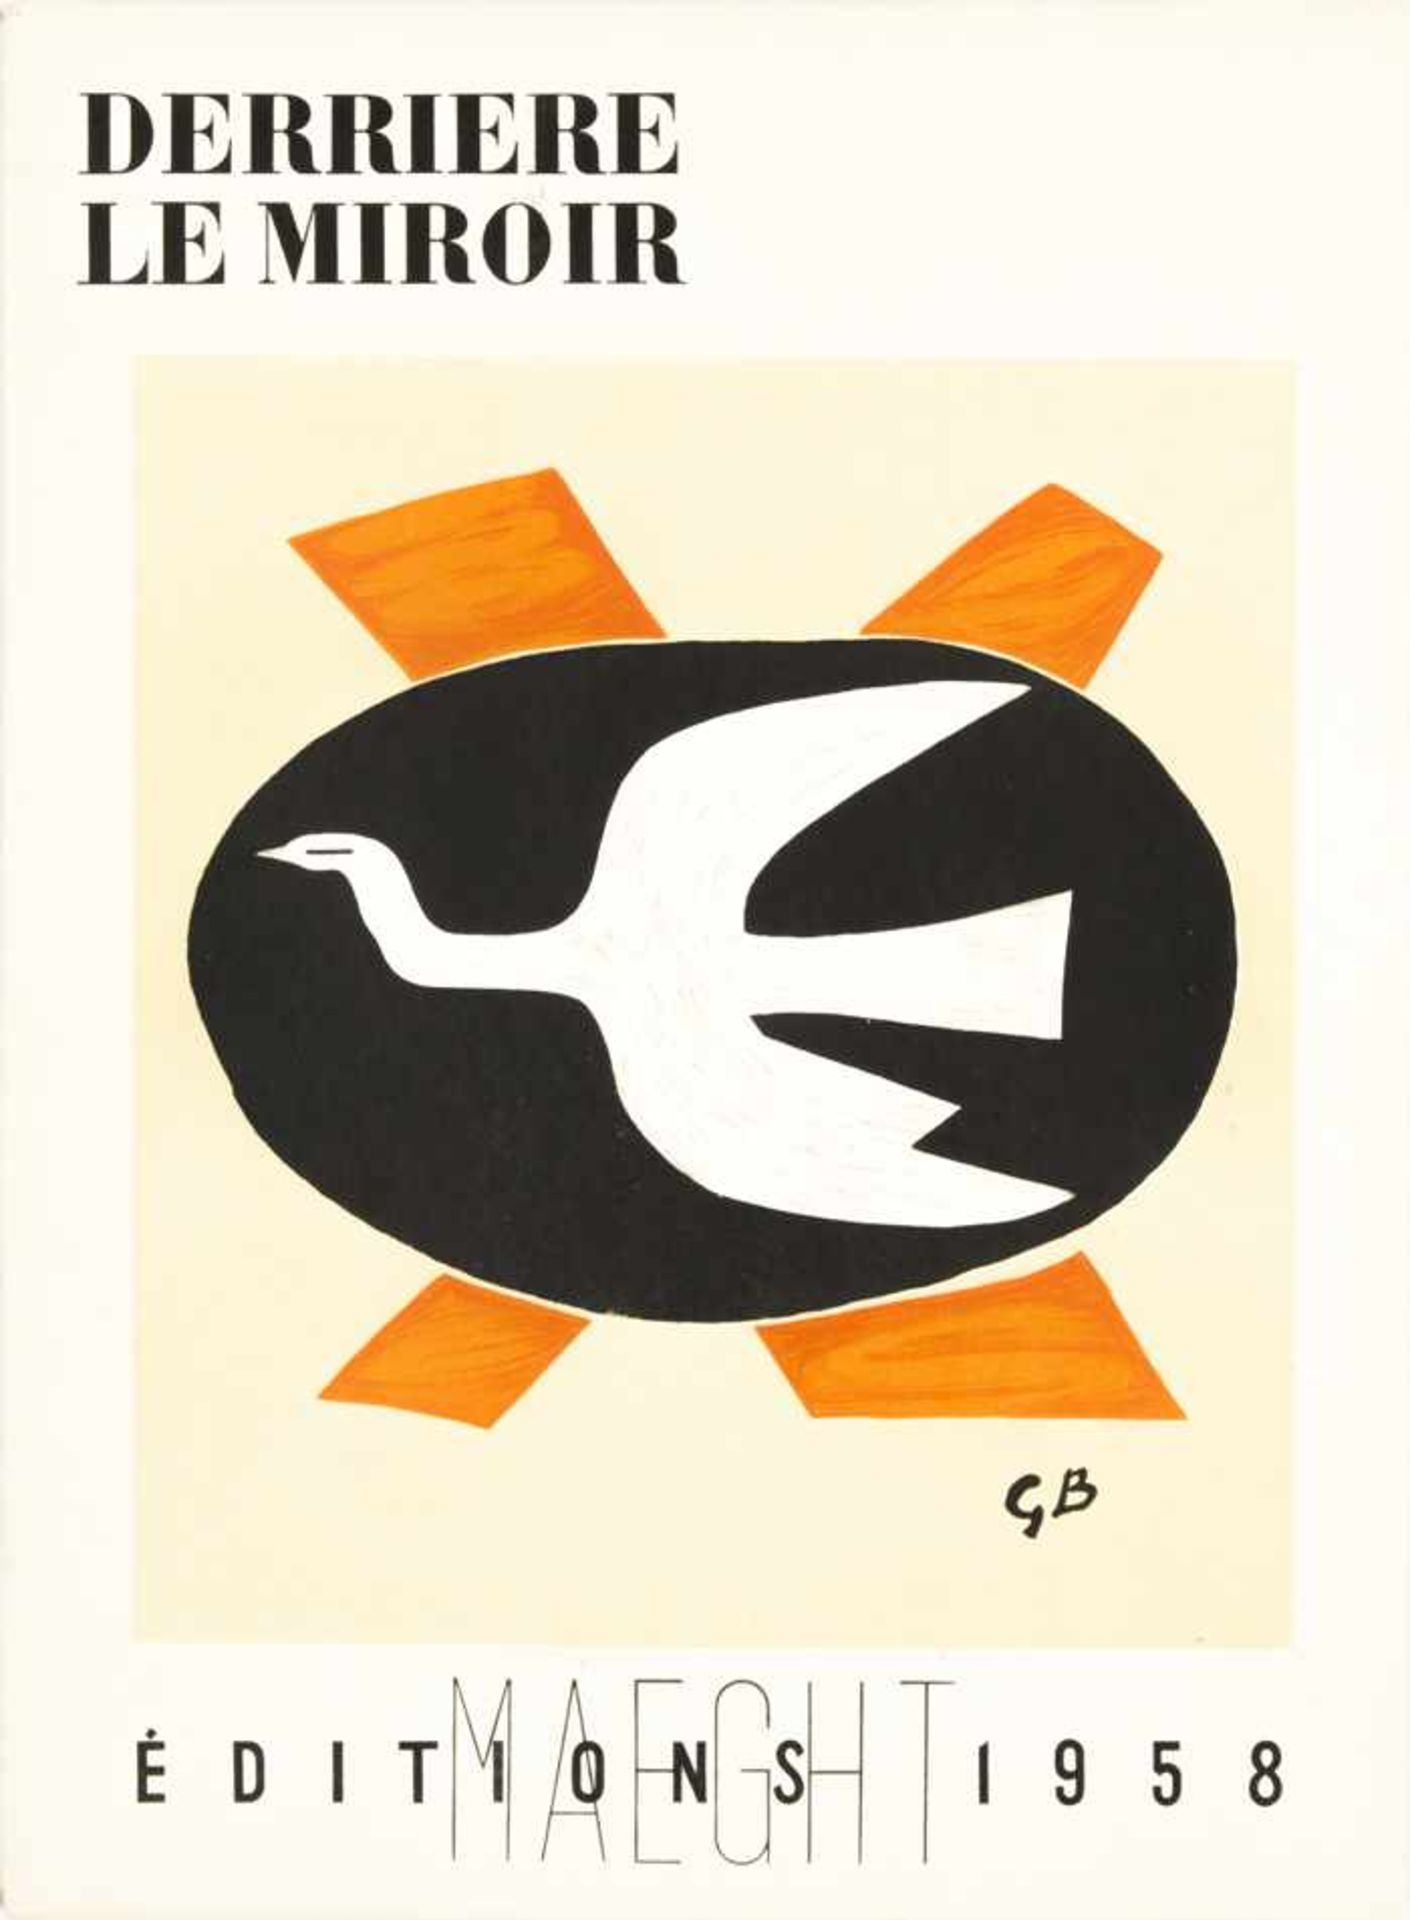 Braque, Georges Derrière le Miror, Edition 112, 1958 Seitenanzahl: 16